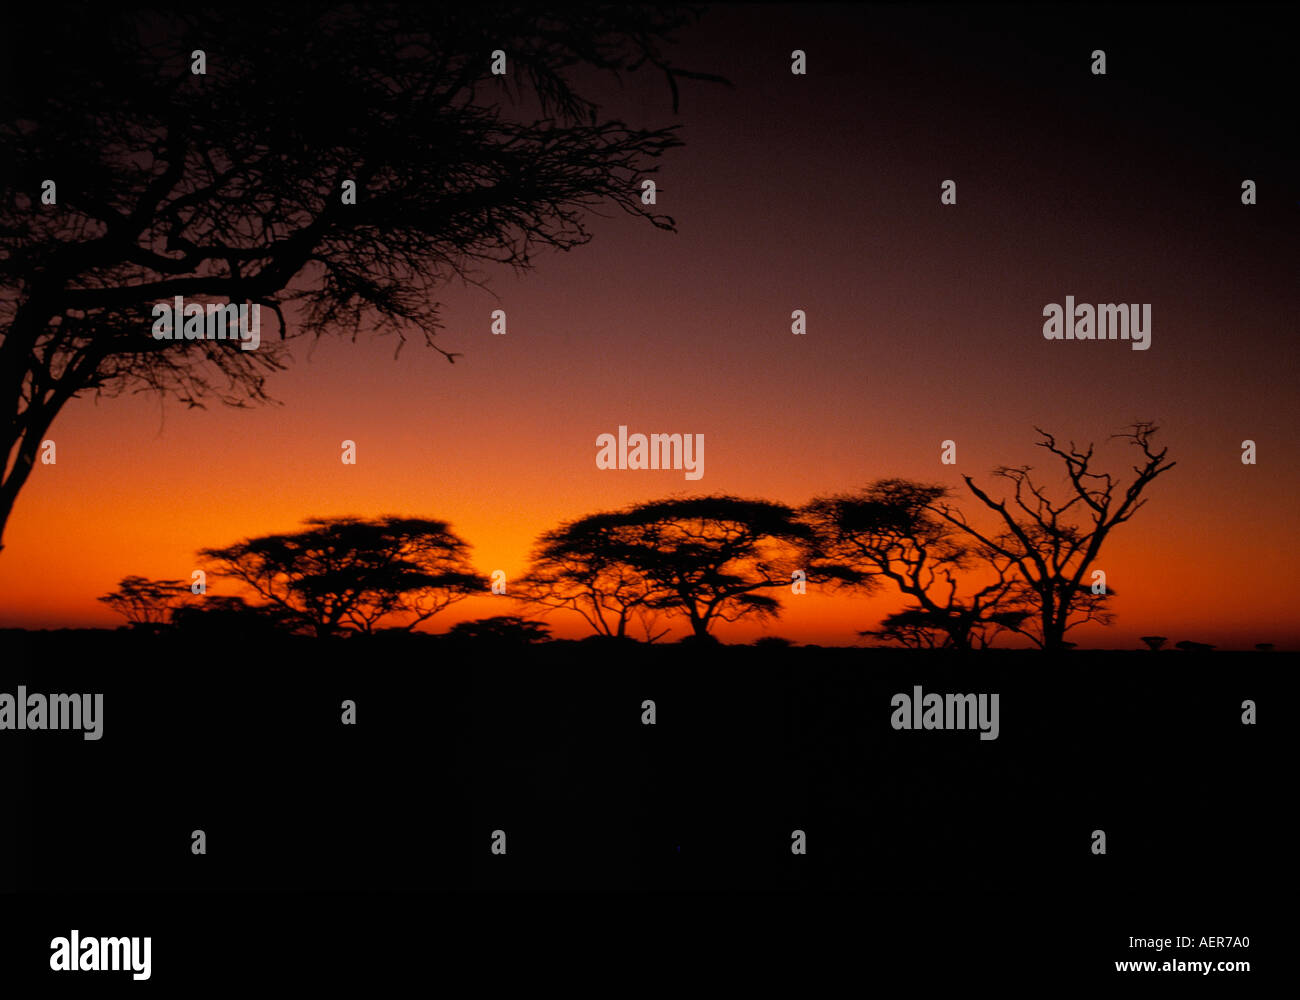 Savanne Bäume am Abend Serengeti Nationalpark, Tansania Stockfoto